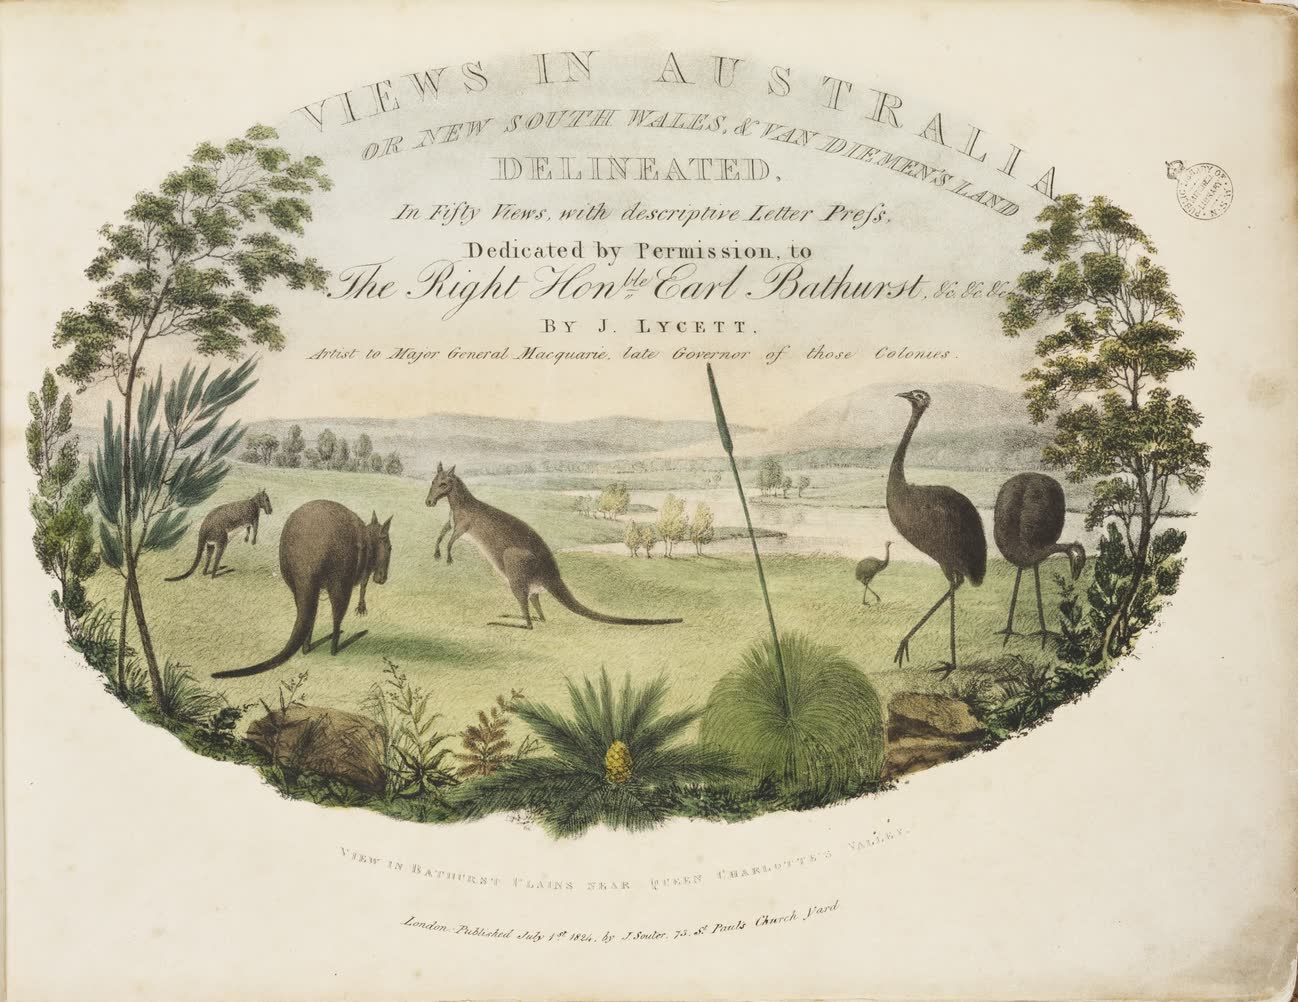 Australia - Views in Australia or New South Wales